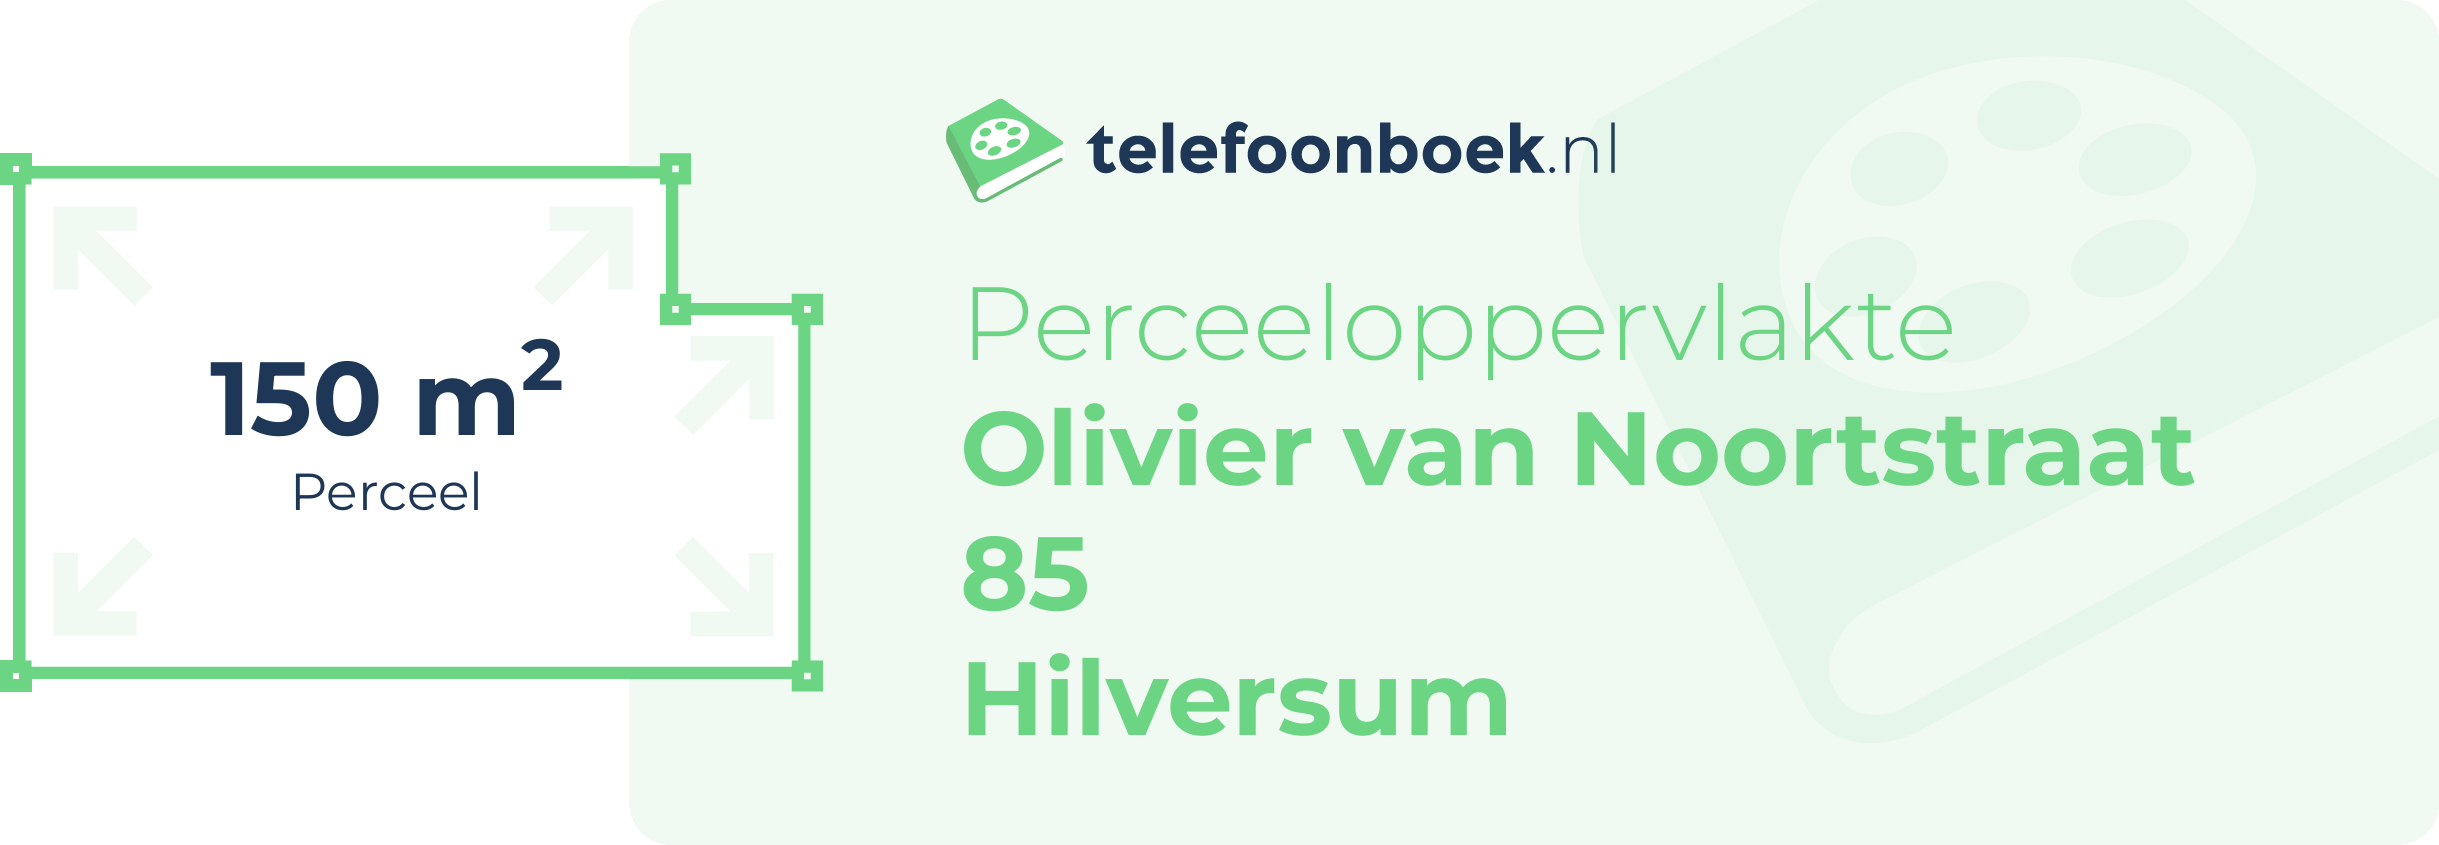 Perceeloppervlakte Olivier Van Noortstraat 85 Hilversum